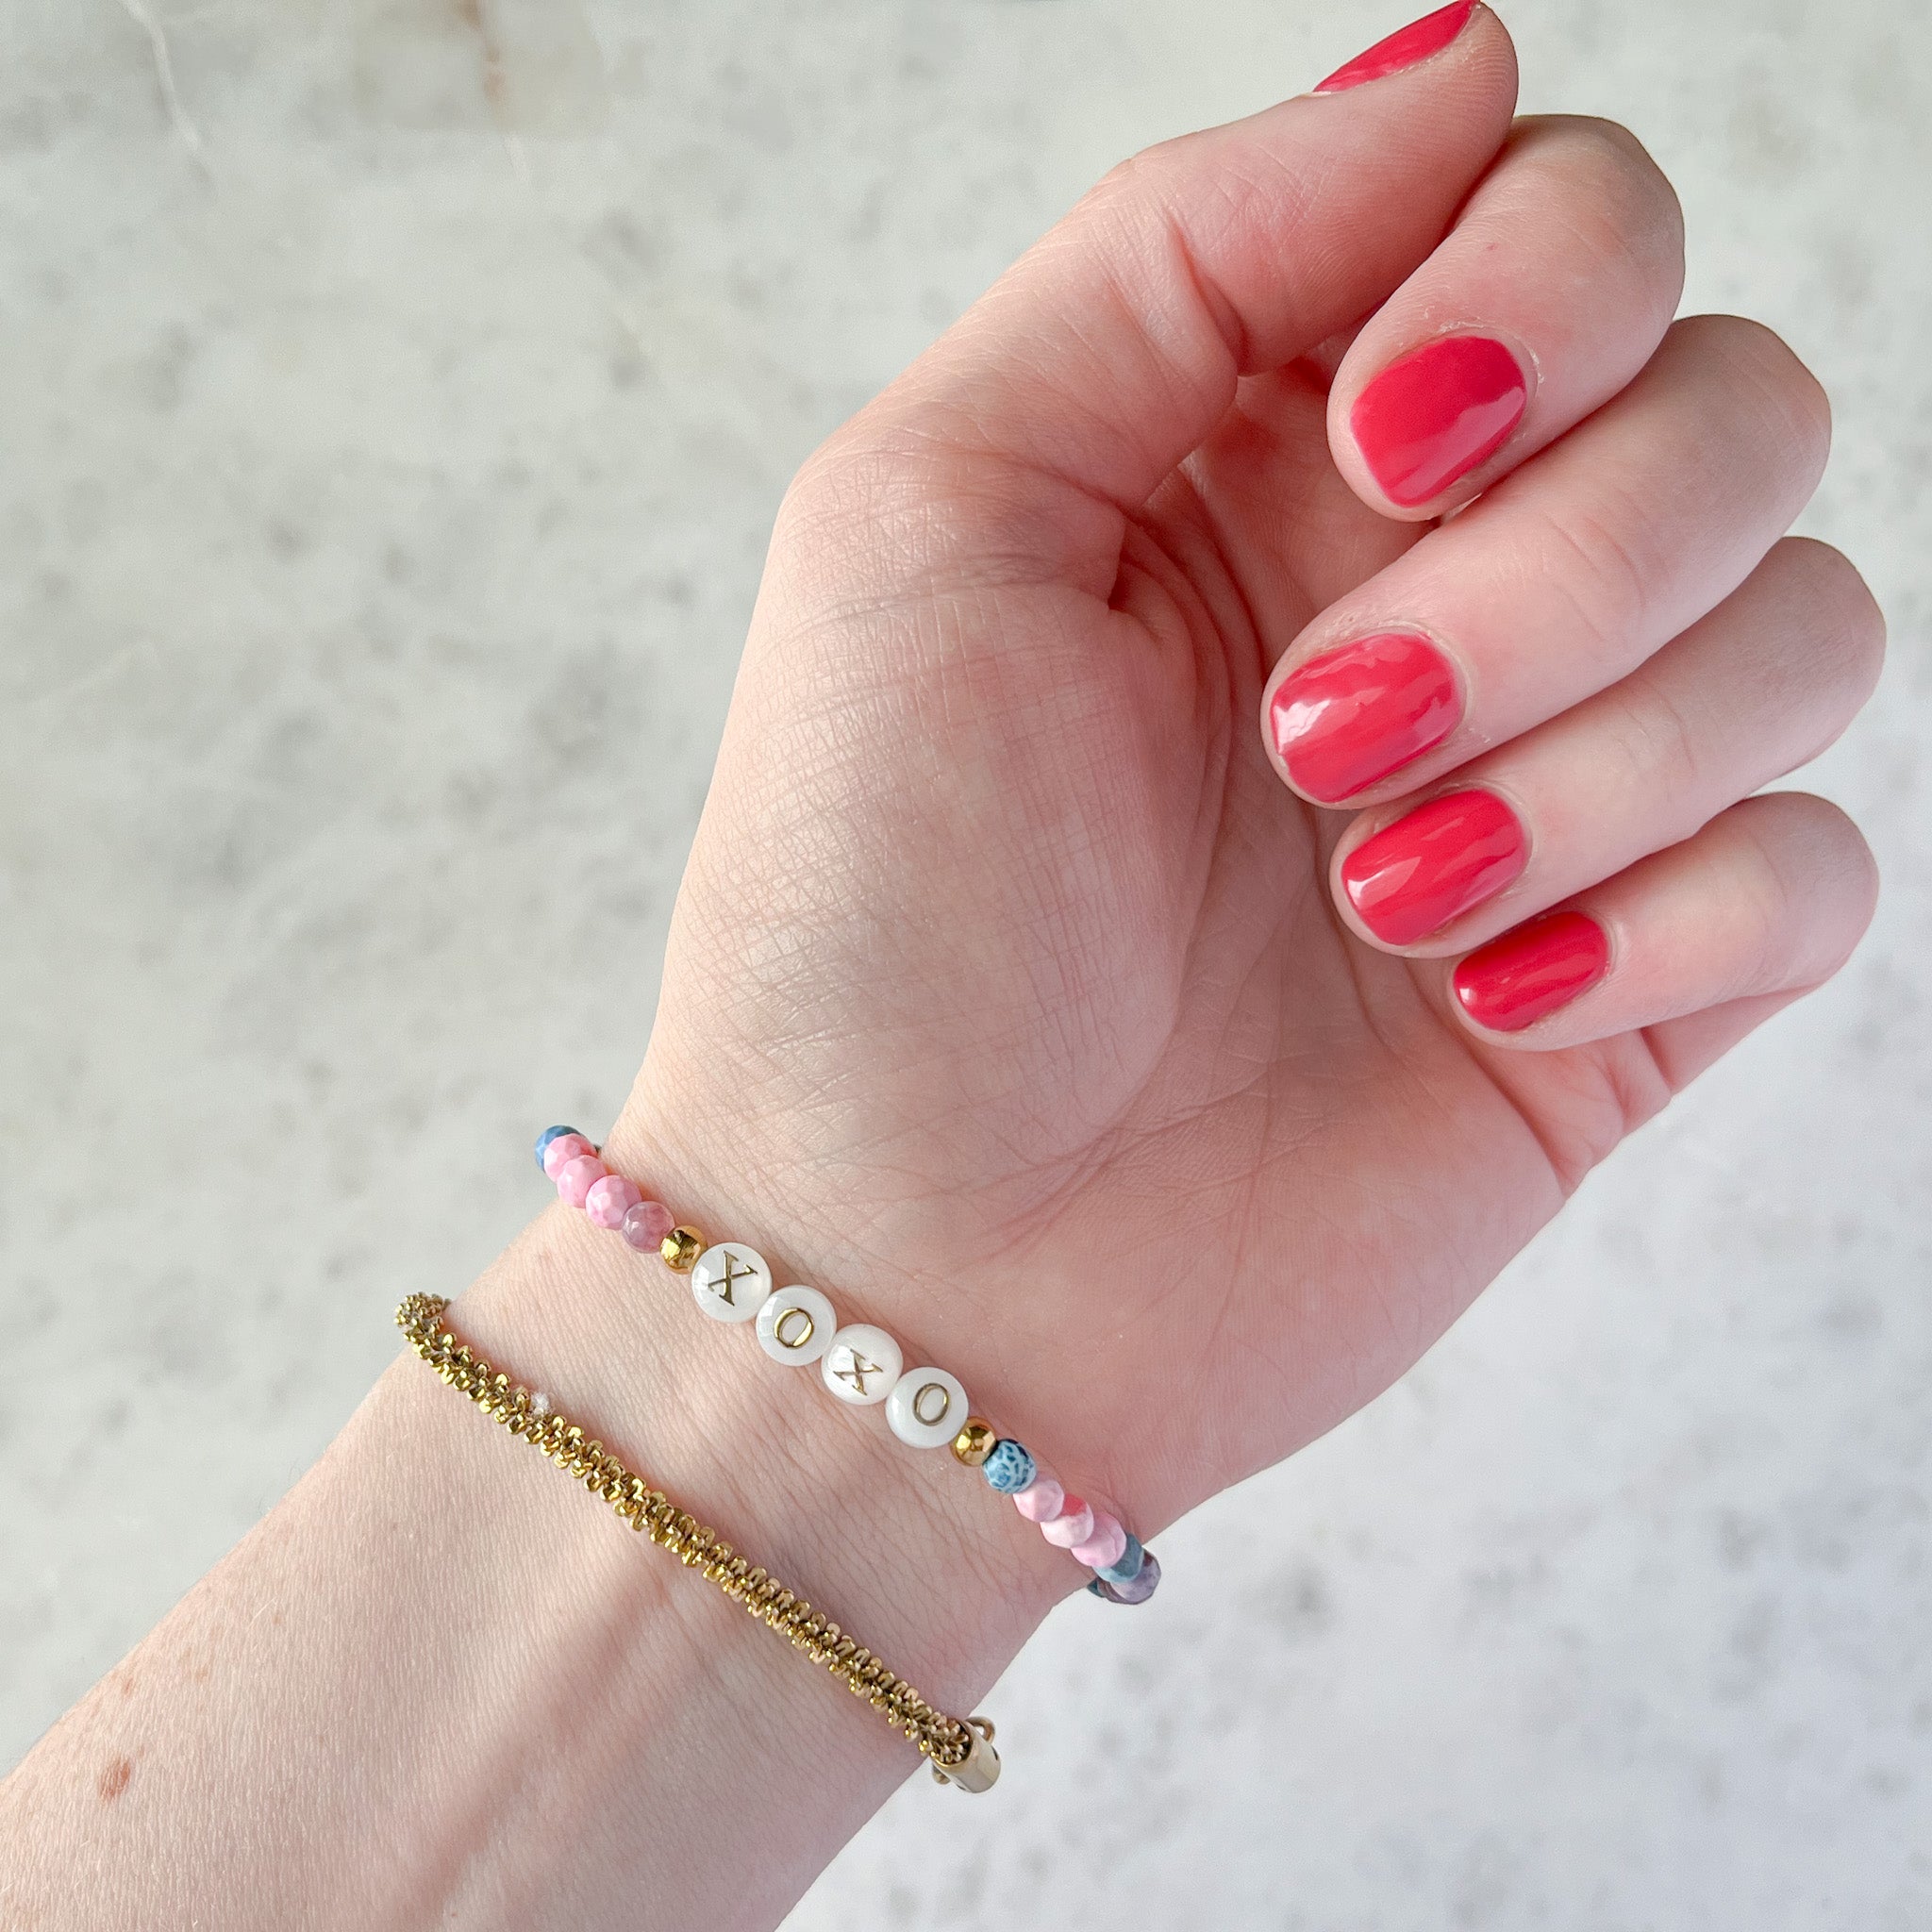 BISOU | XOXO Rainbow Agate Beaded Bracelet